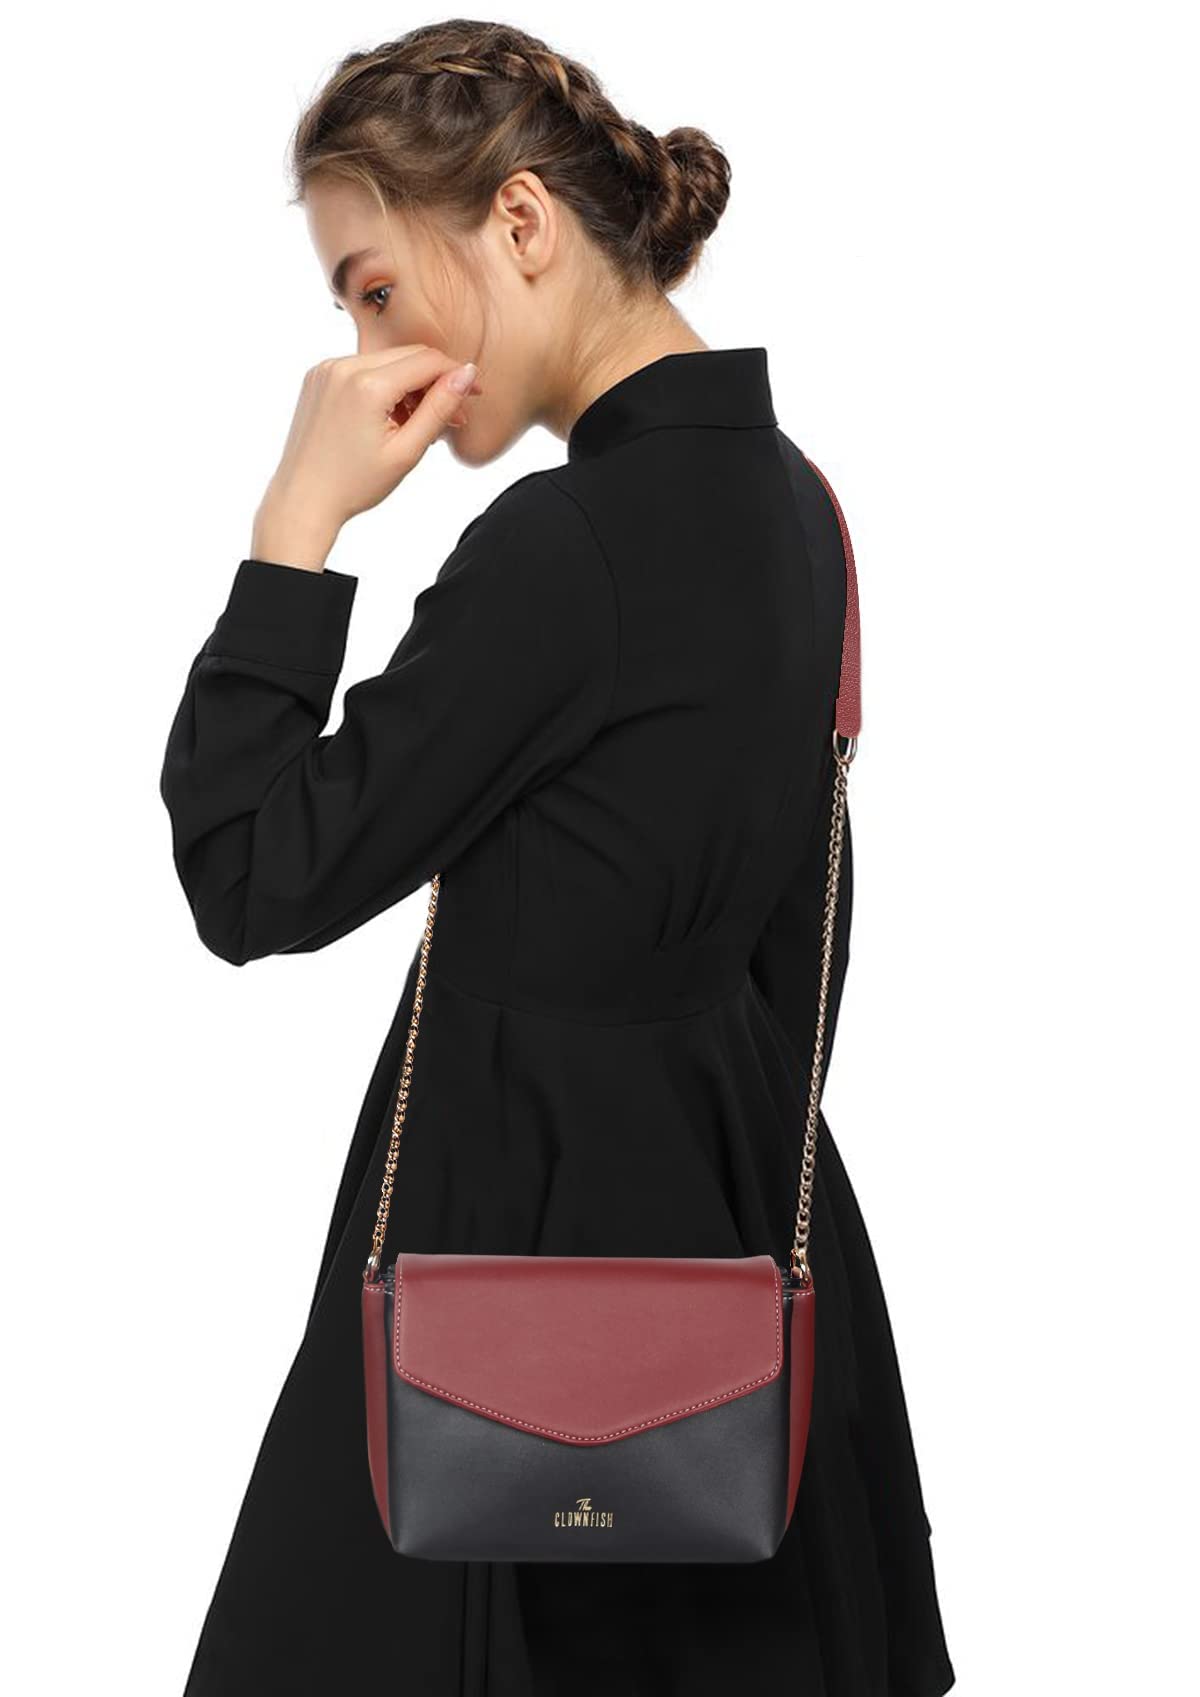 The Clownfish Annabelle Handbag for Women Office Bag Ladies Shoulder Bag Tote for Women College Girls (Maroon)